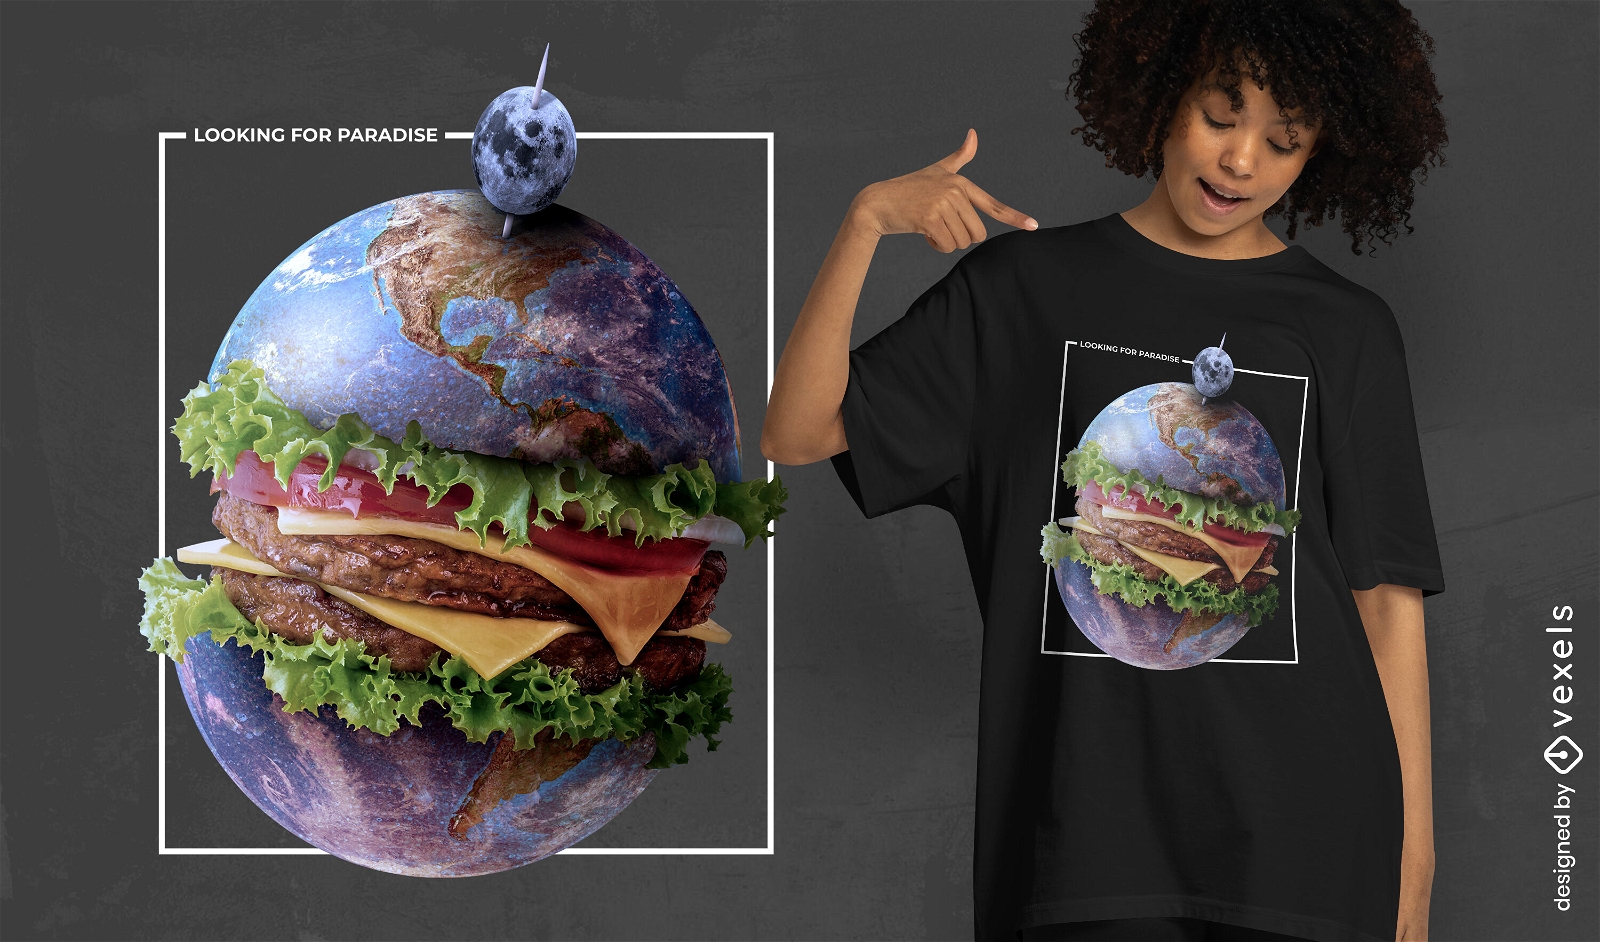 T-shirt de comida de hamb?rguer do planeta terra psd